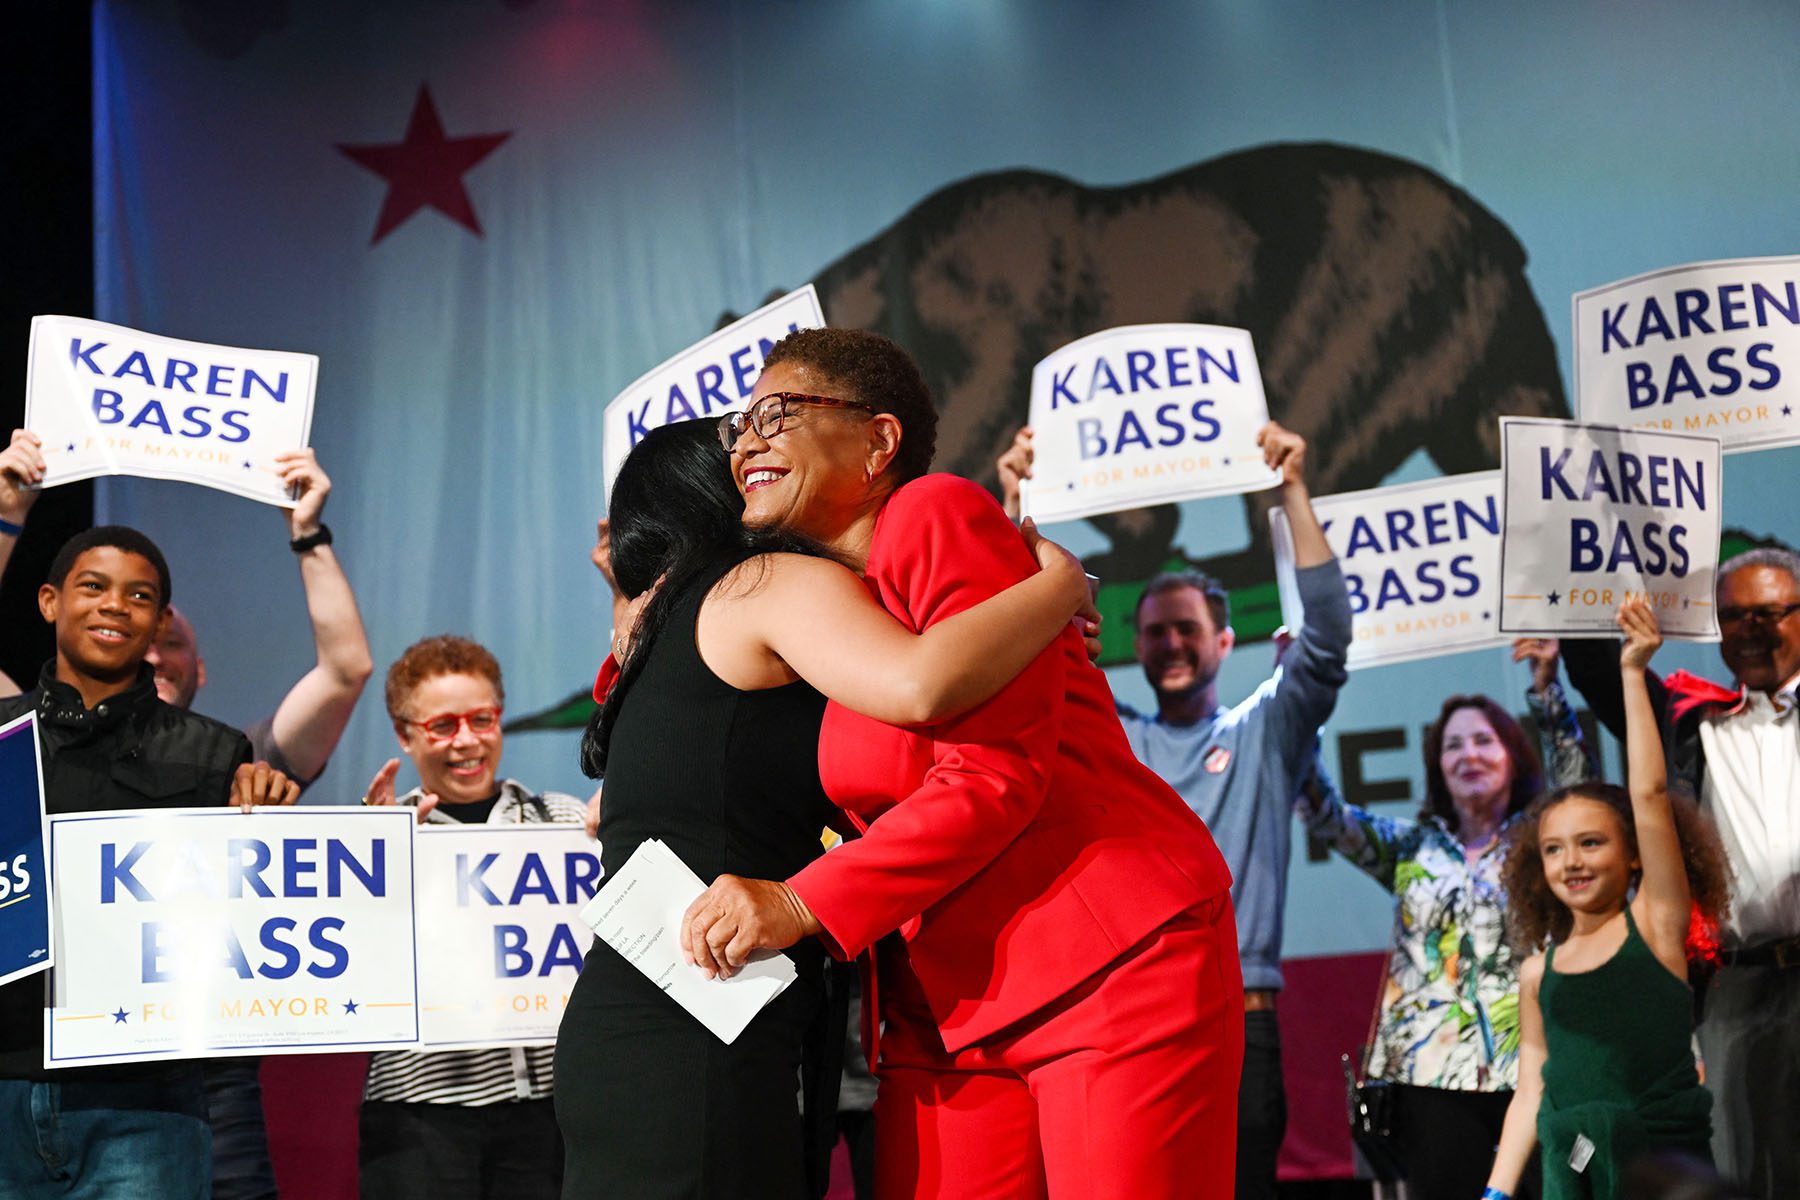 Karen Bass hugs her daughter as supporters holding "Karen Bass for Mayor" smile and cheer.